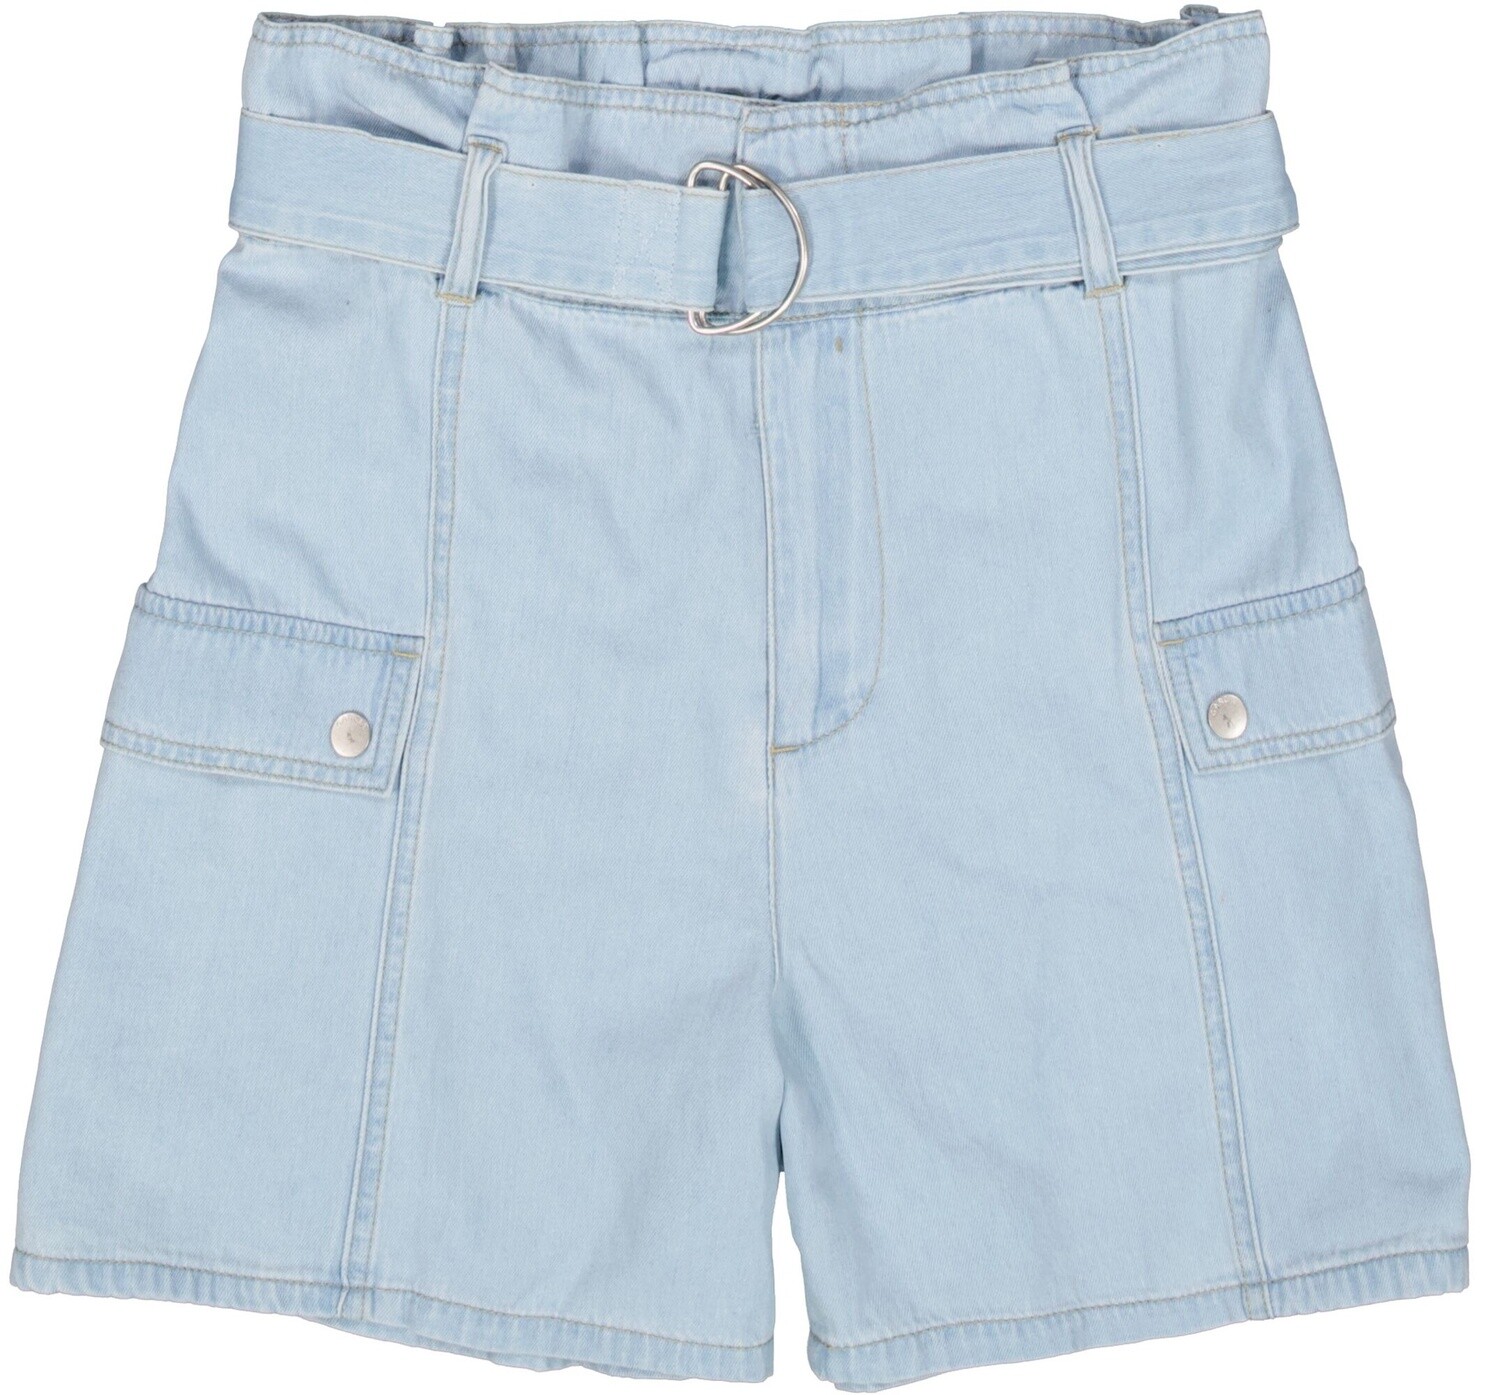 Garcia Shorts jeans bleu pâle P40340, Size: XS